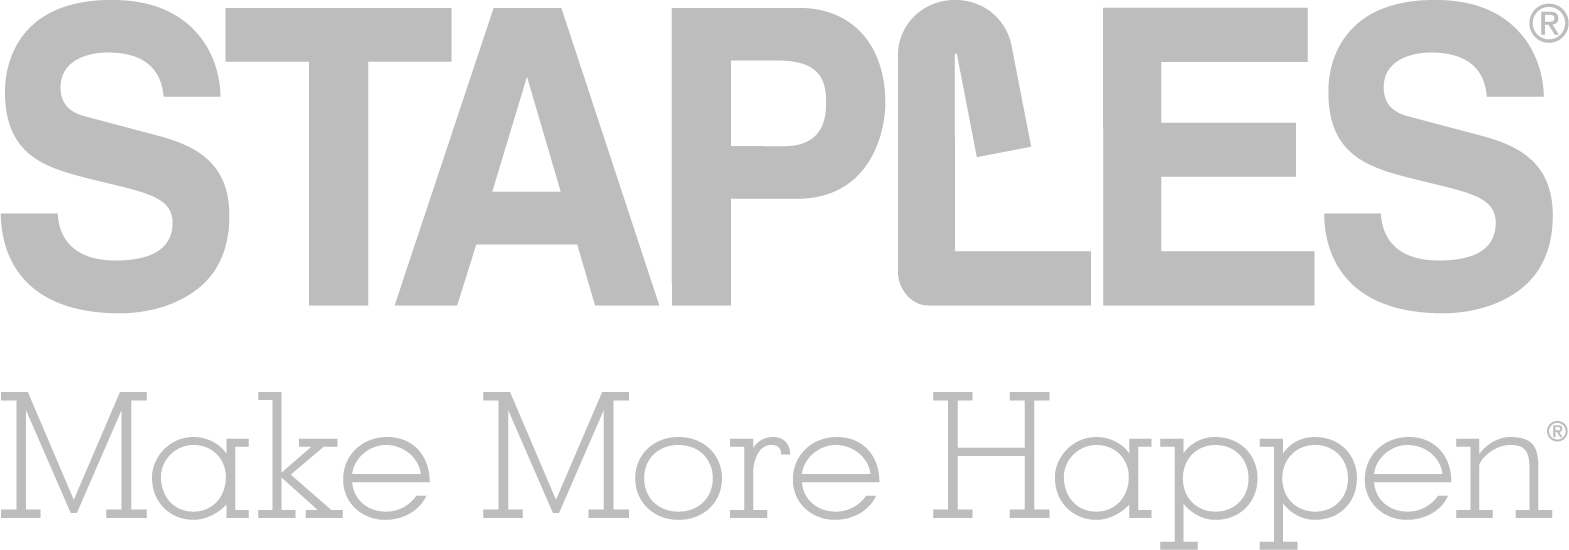 Make More Happen Staples Logo - Staples Make More Happen. Statista Content & Information Design